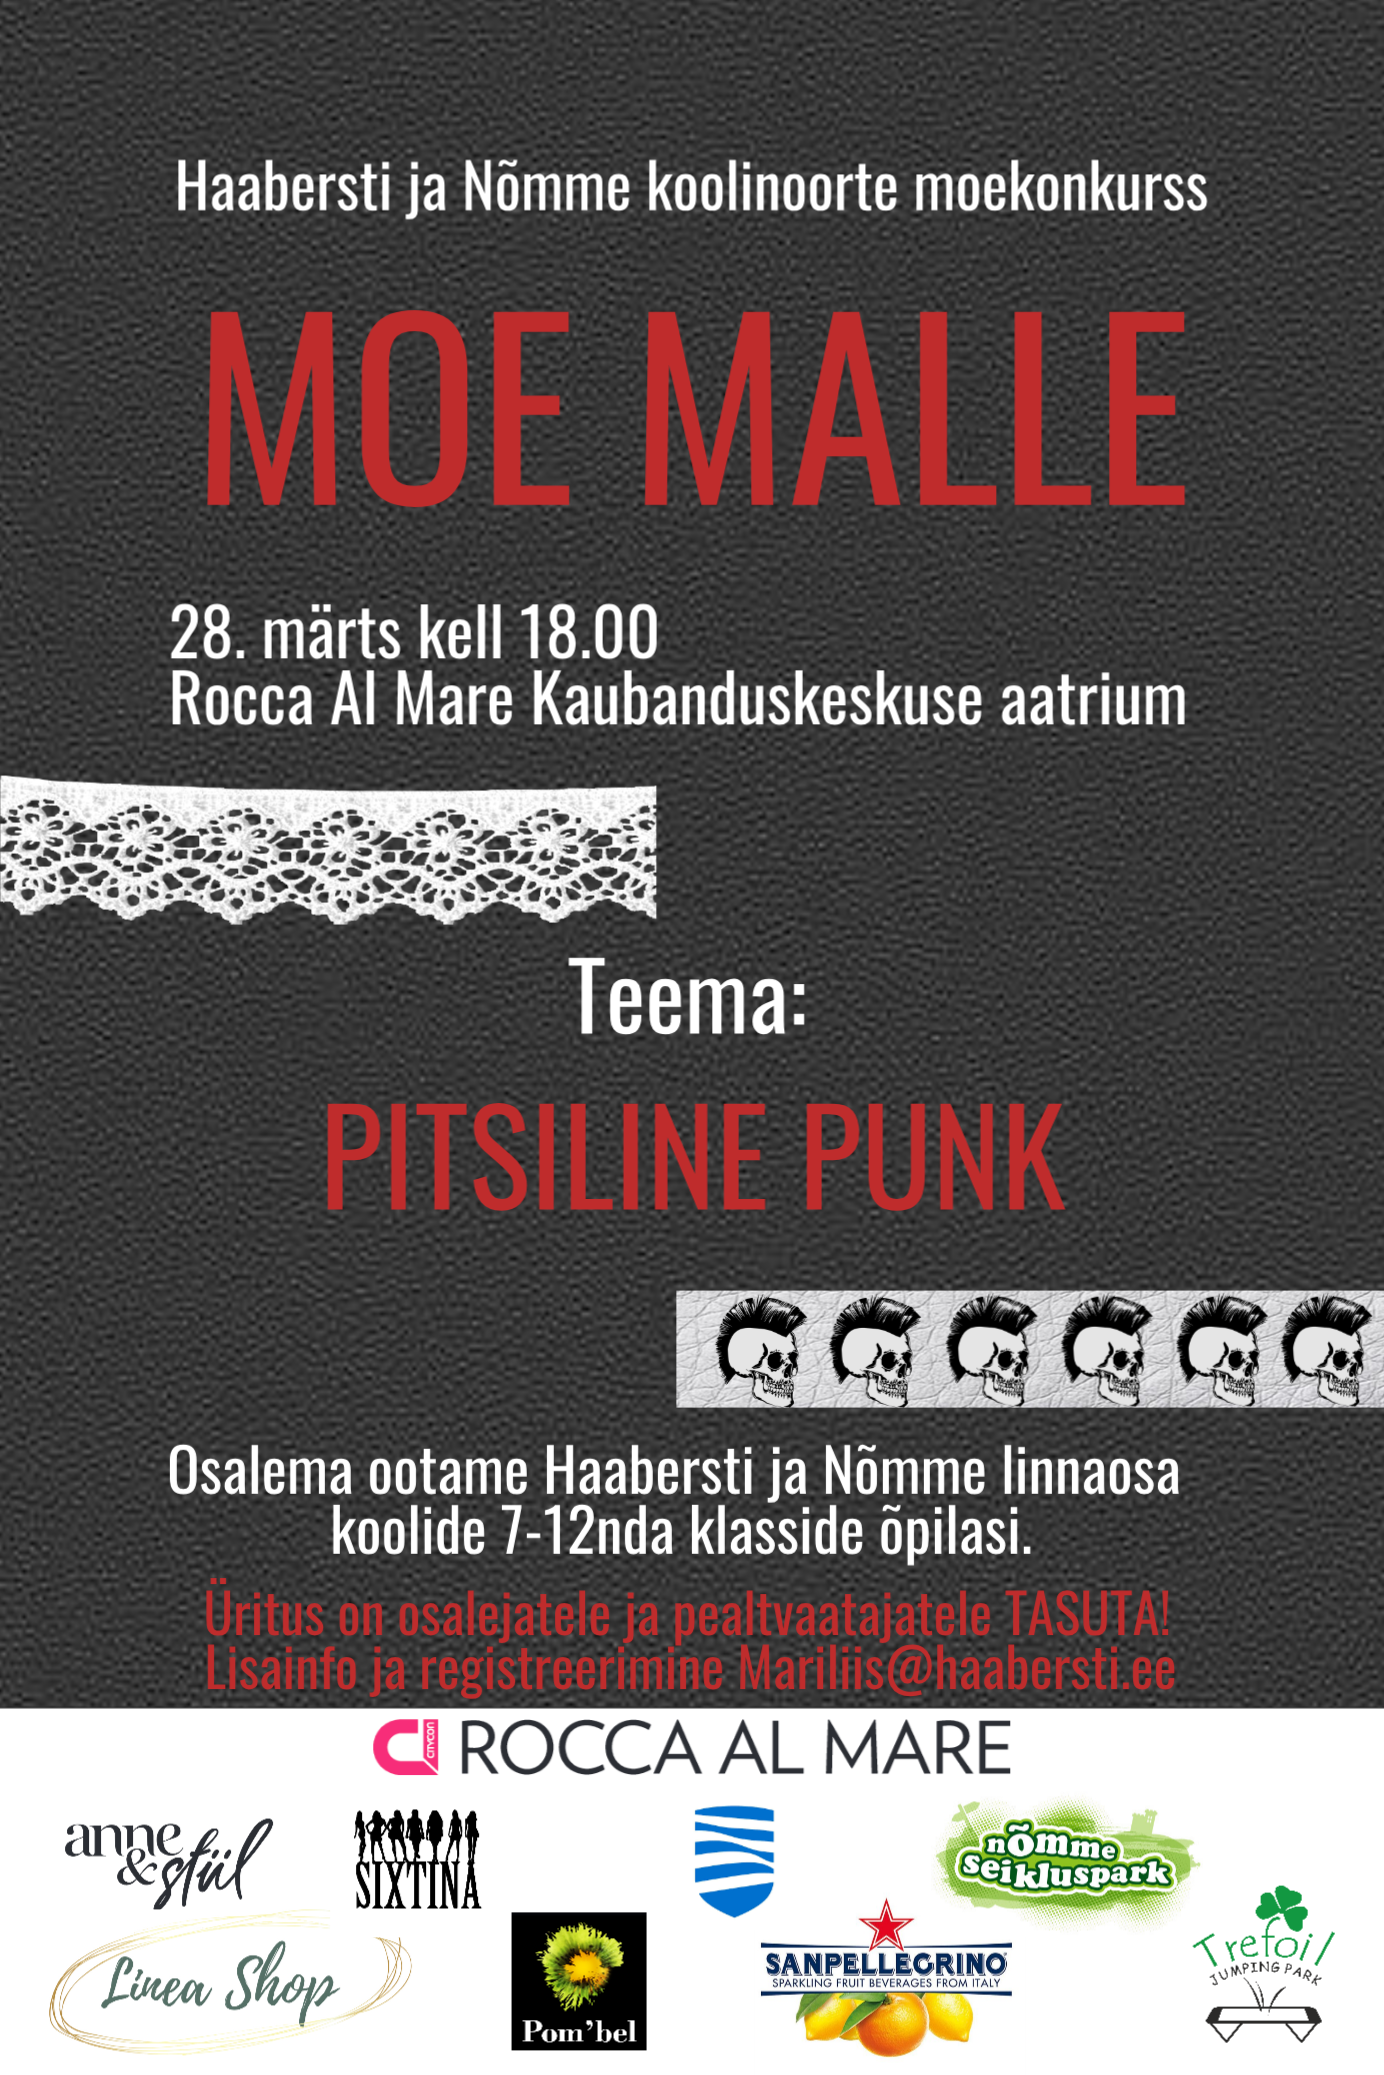 MoeMalle2019 plakat